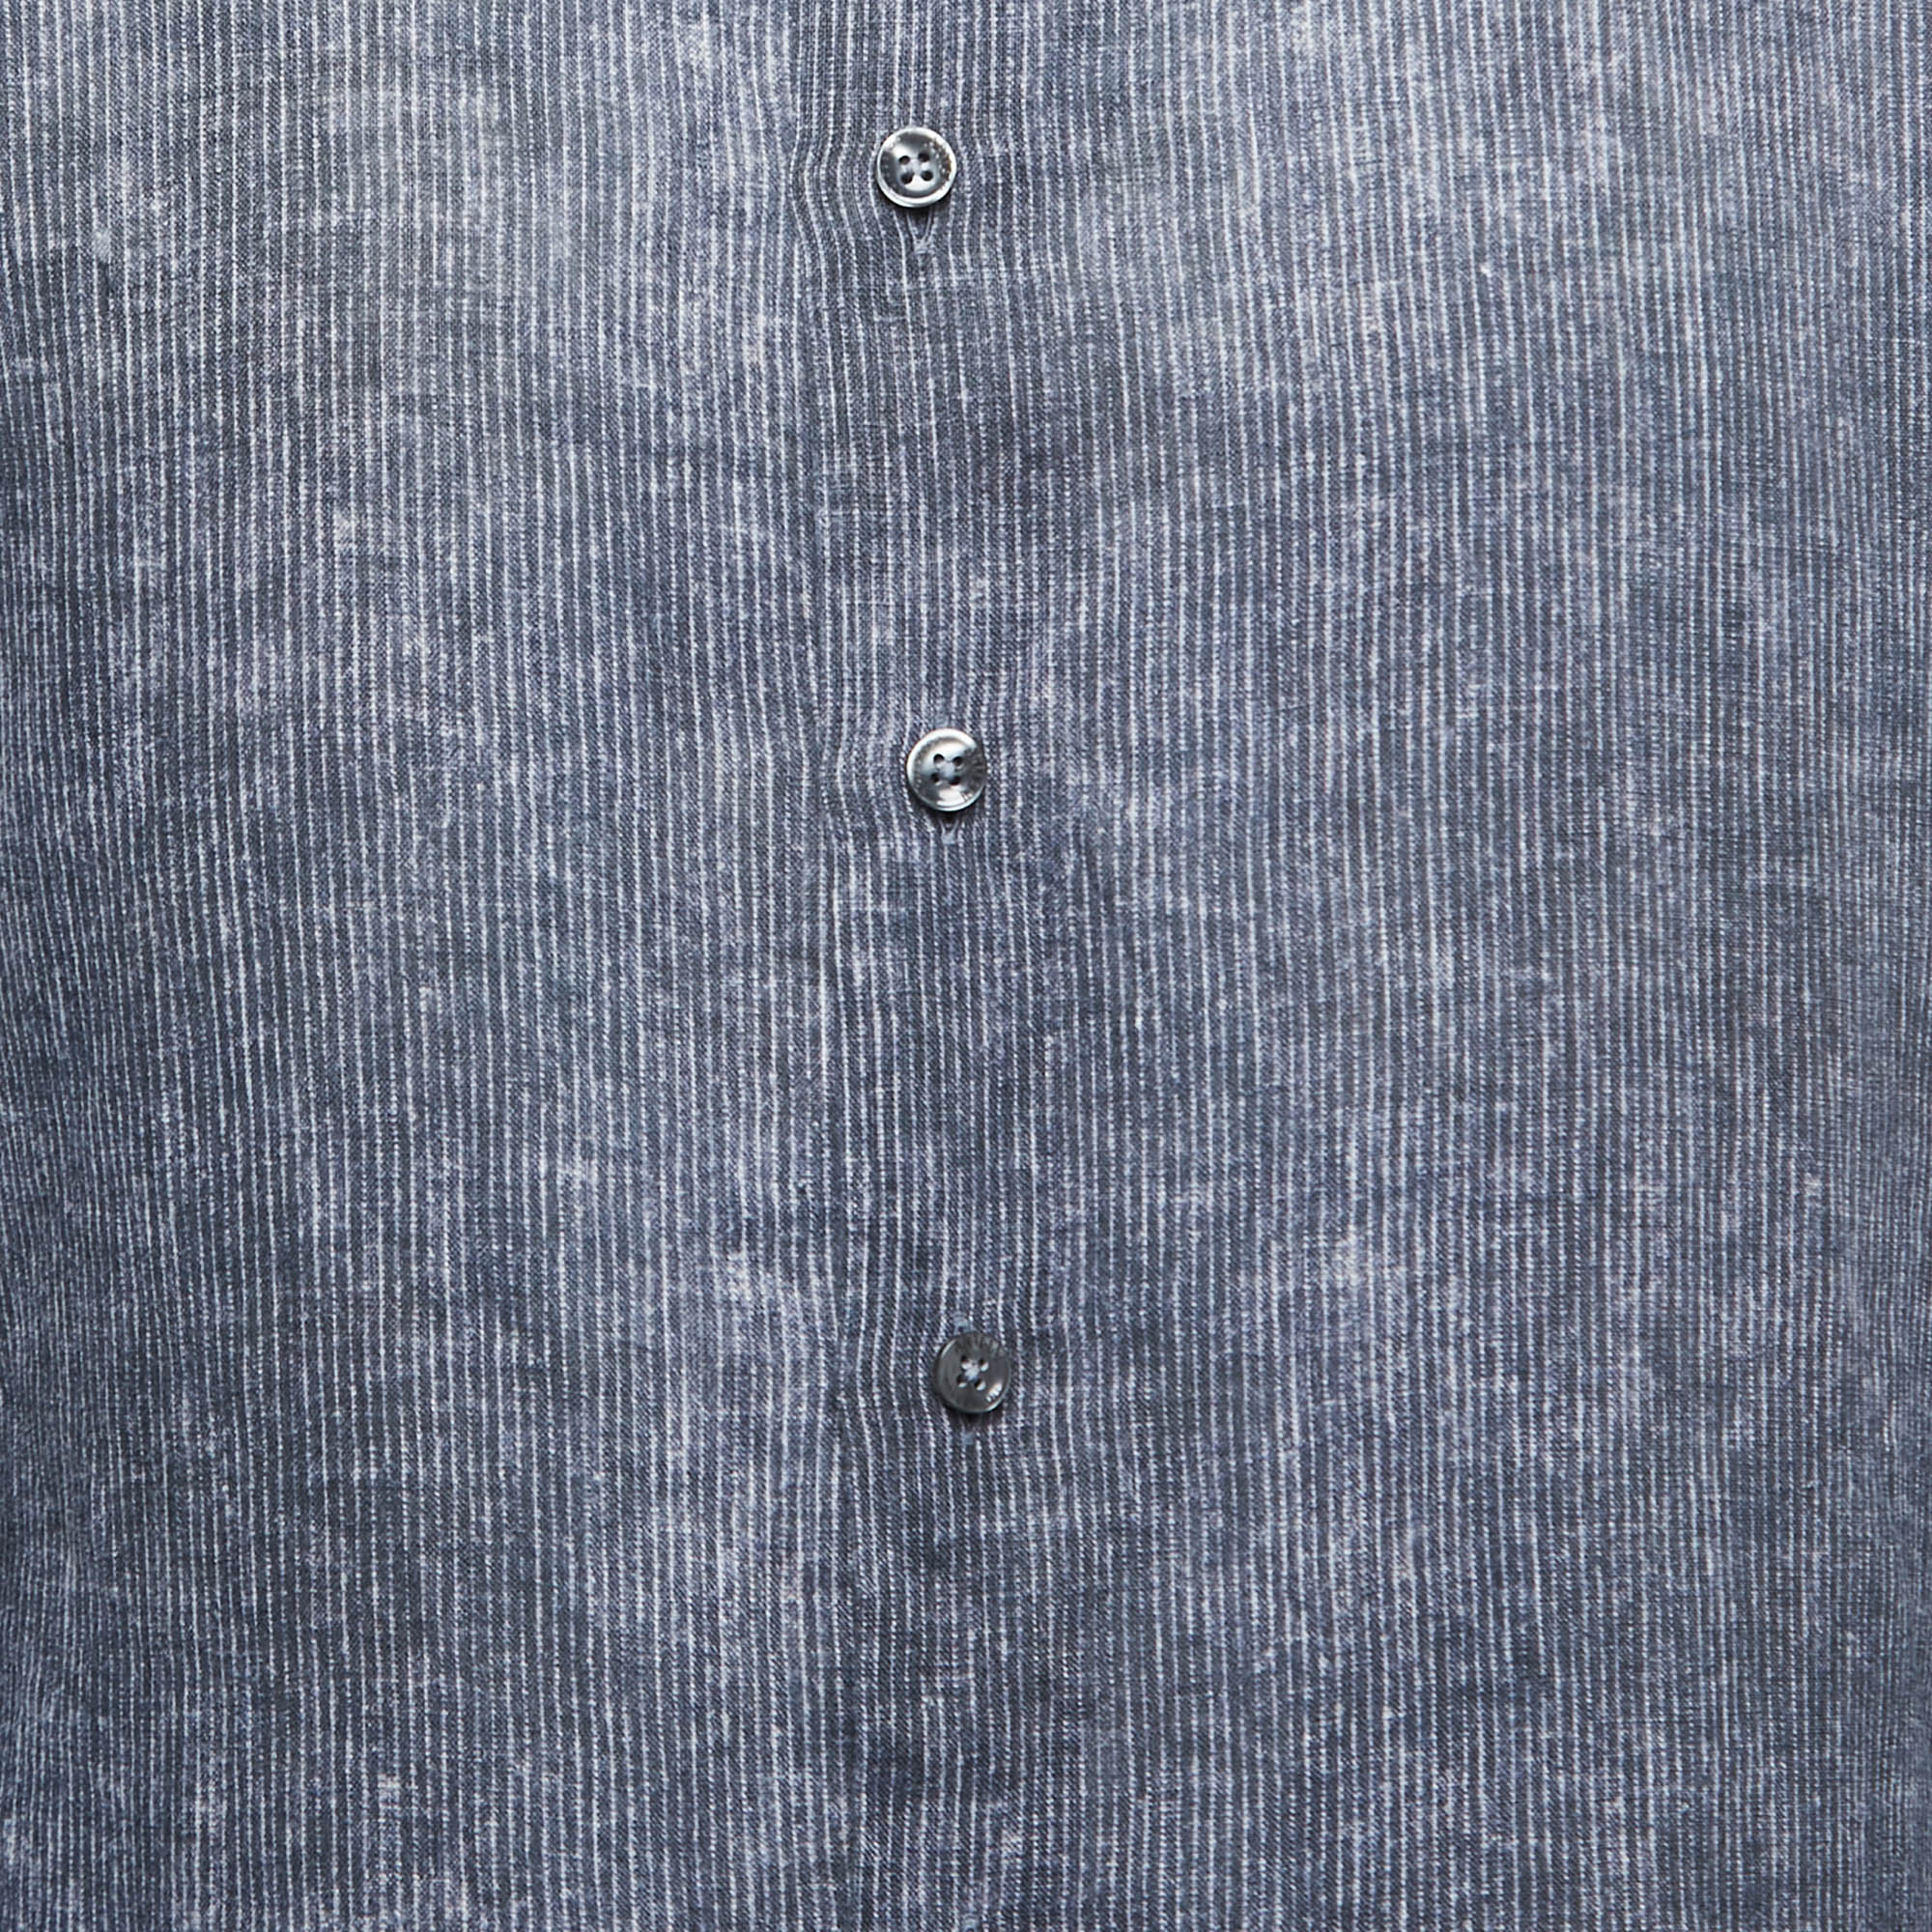 Armani Collezioni Grey Striped Cotton Button Front Full Sleeve Shirt S